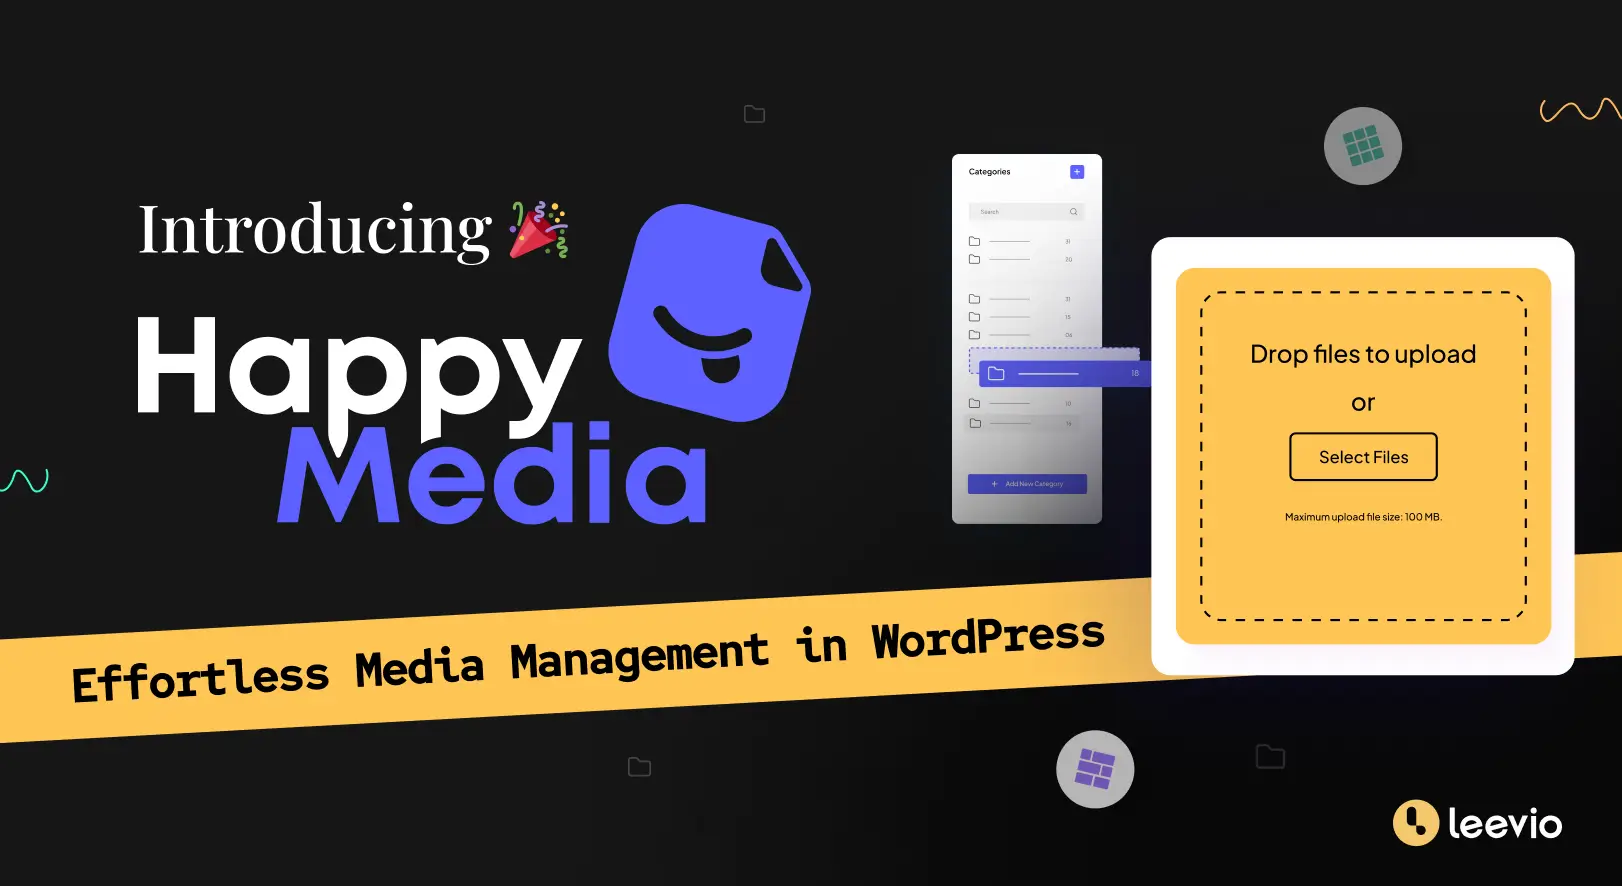 HappyMedia for WordPress Media File Management